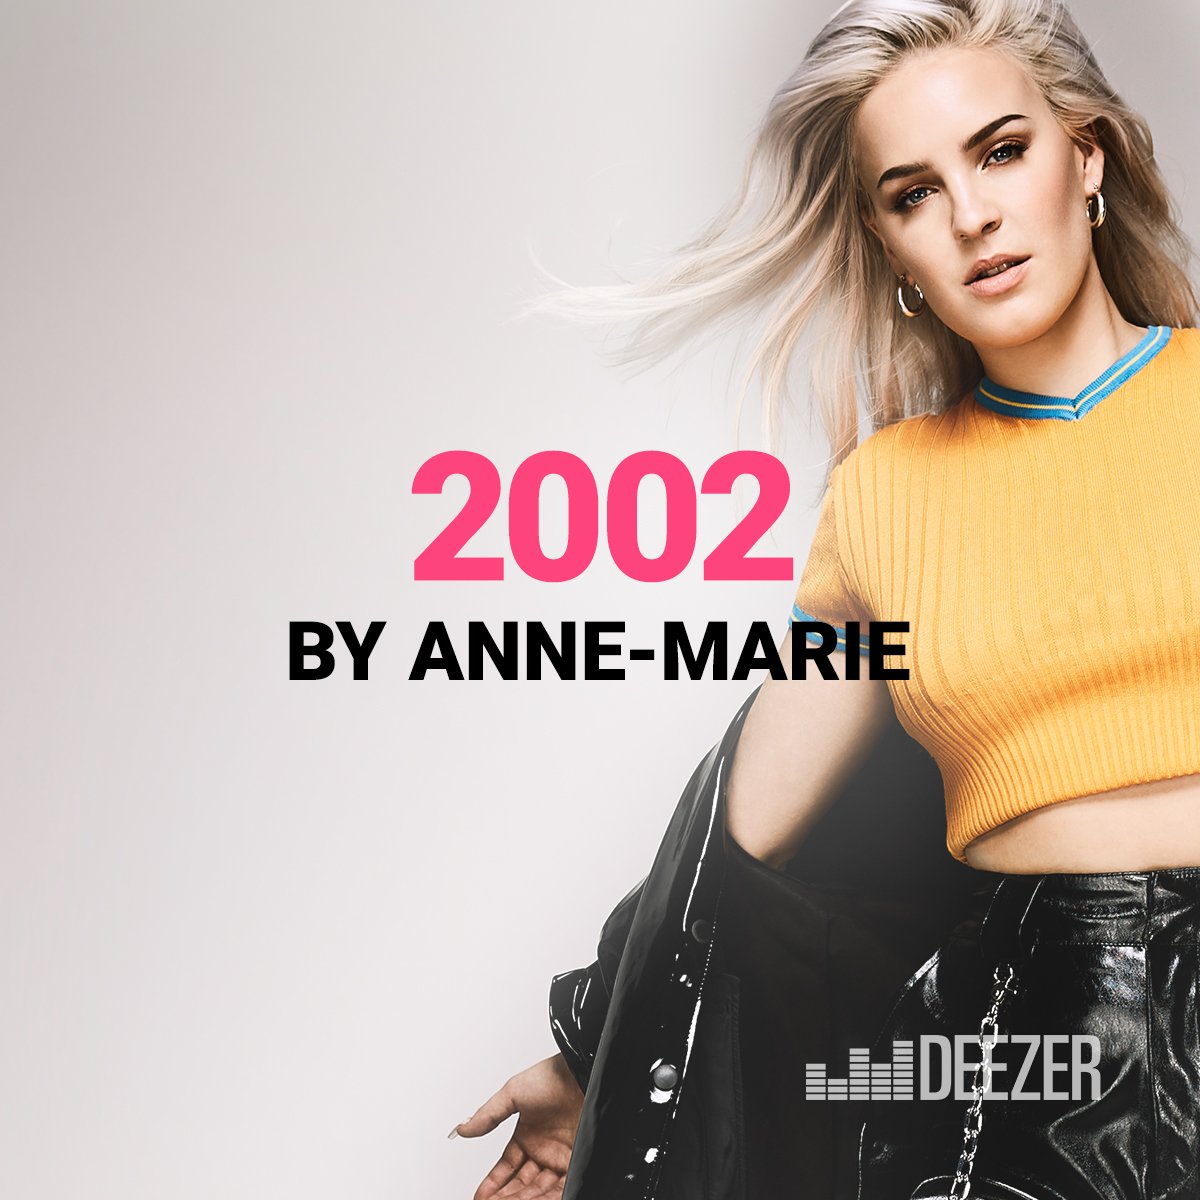 Marie 2002. Anne Marie 2002. Anne Marie 2002 album. 2002 Anne Marie обложка альбома. Энн-Мари (певица)+18.